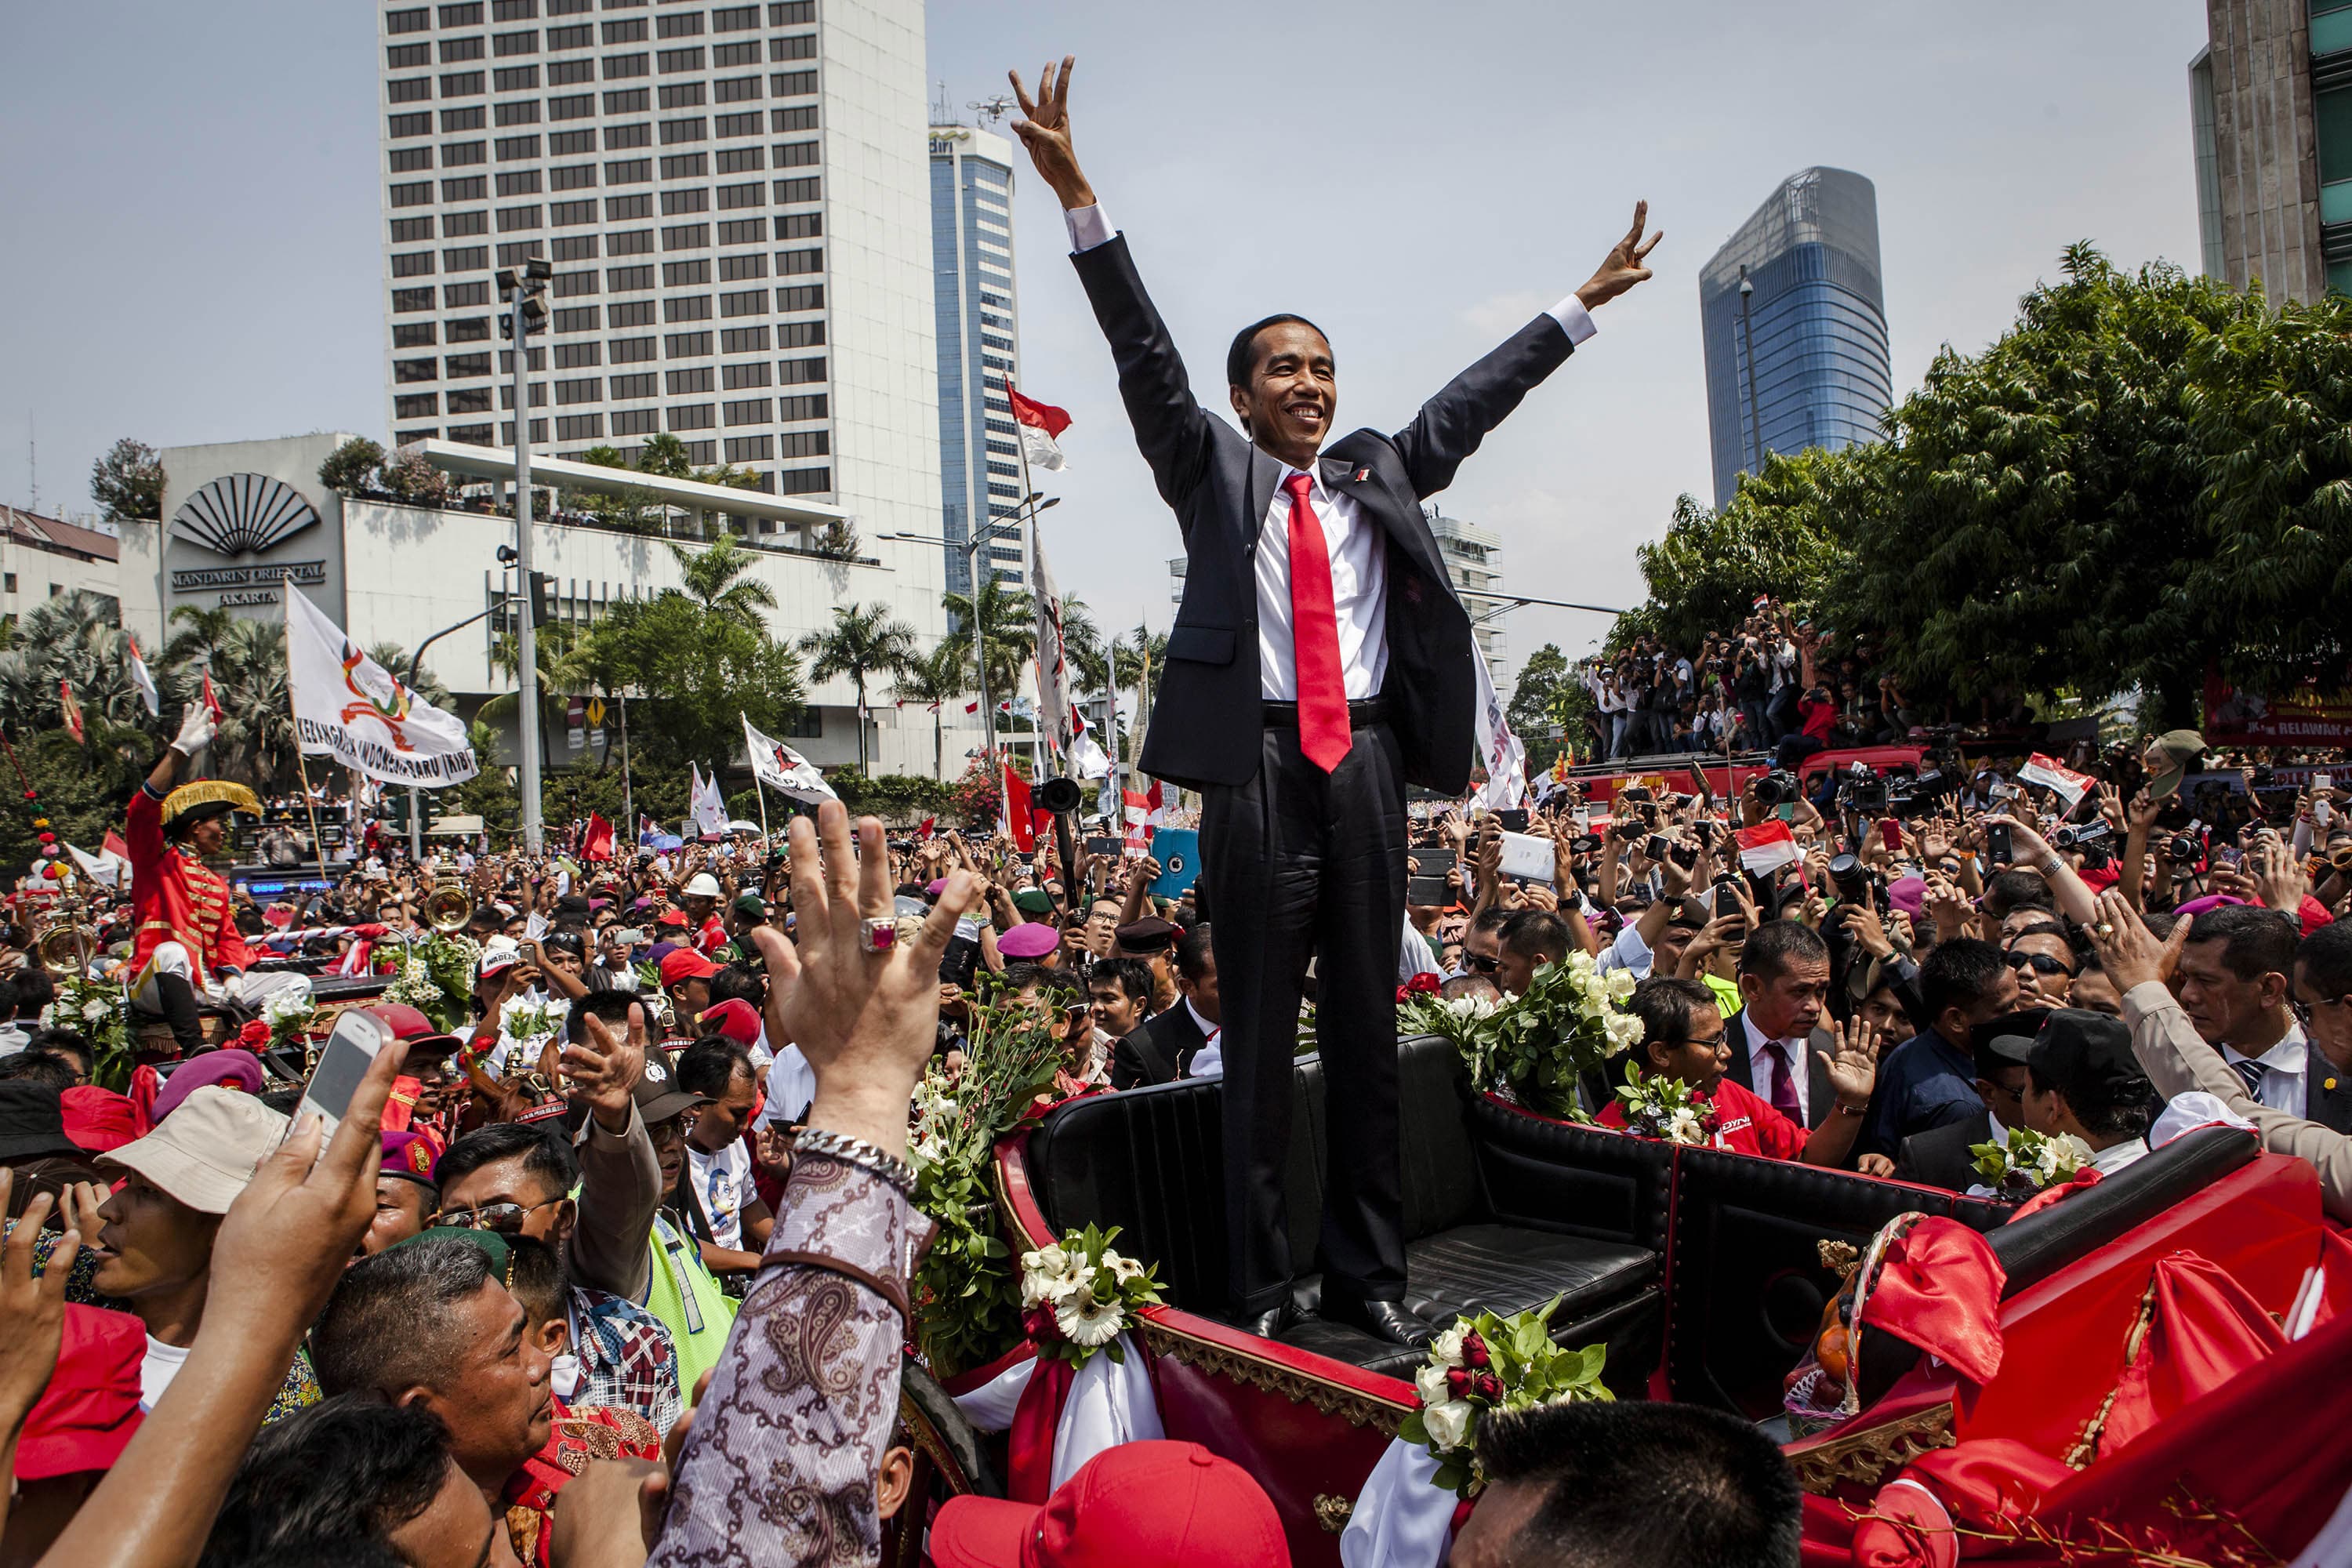 Kekhawatiran terhadap Jokowi dan nepotisme